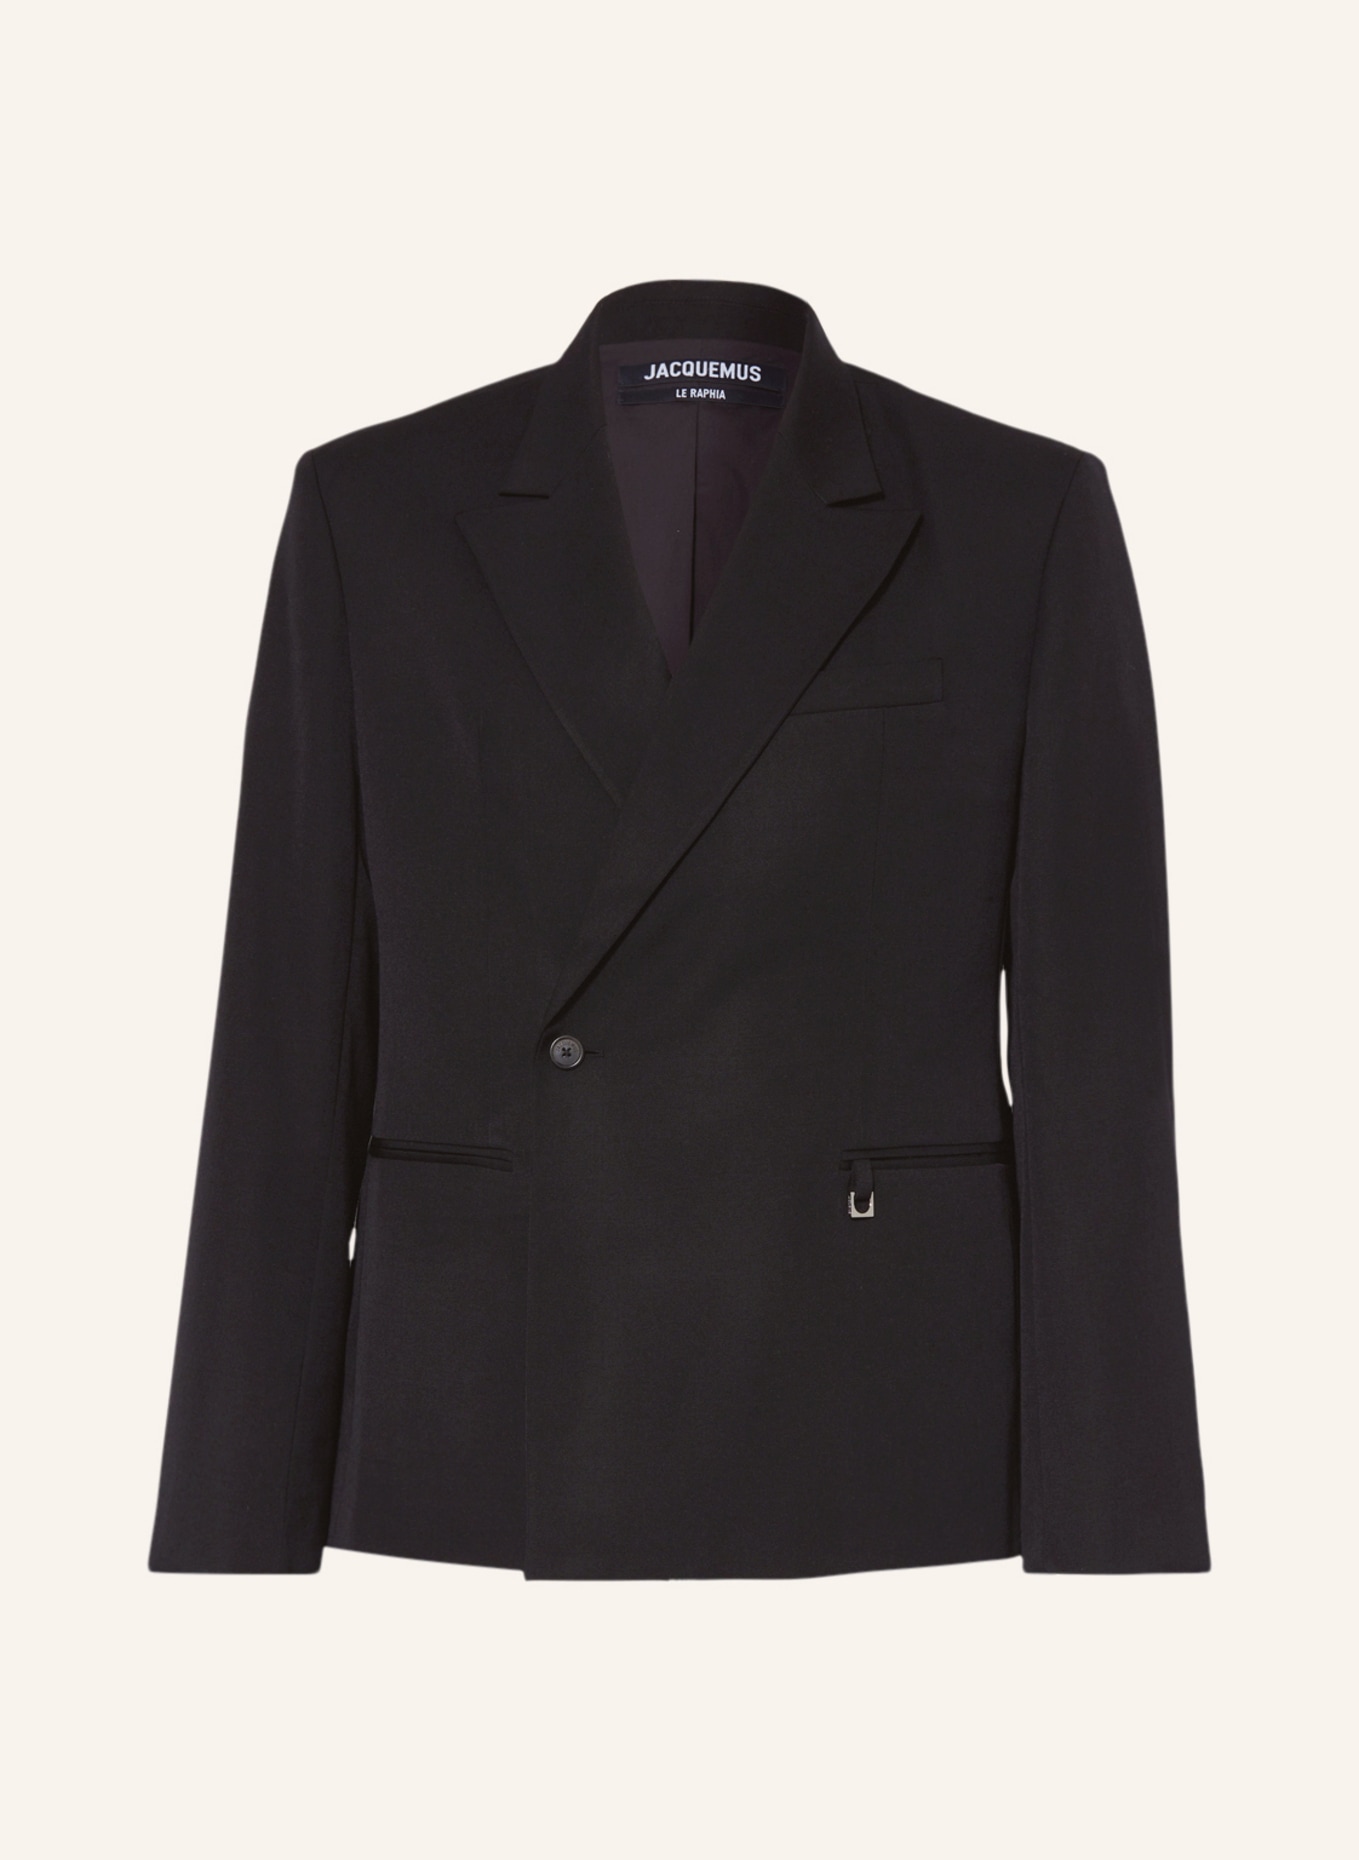 JACQUEMUS Tailored jacket LA VESTE MADEIRO regular fit in black